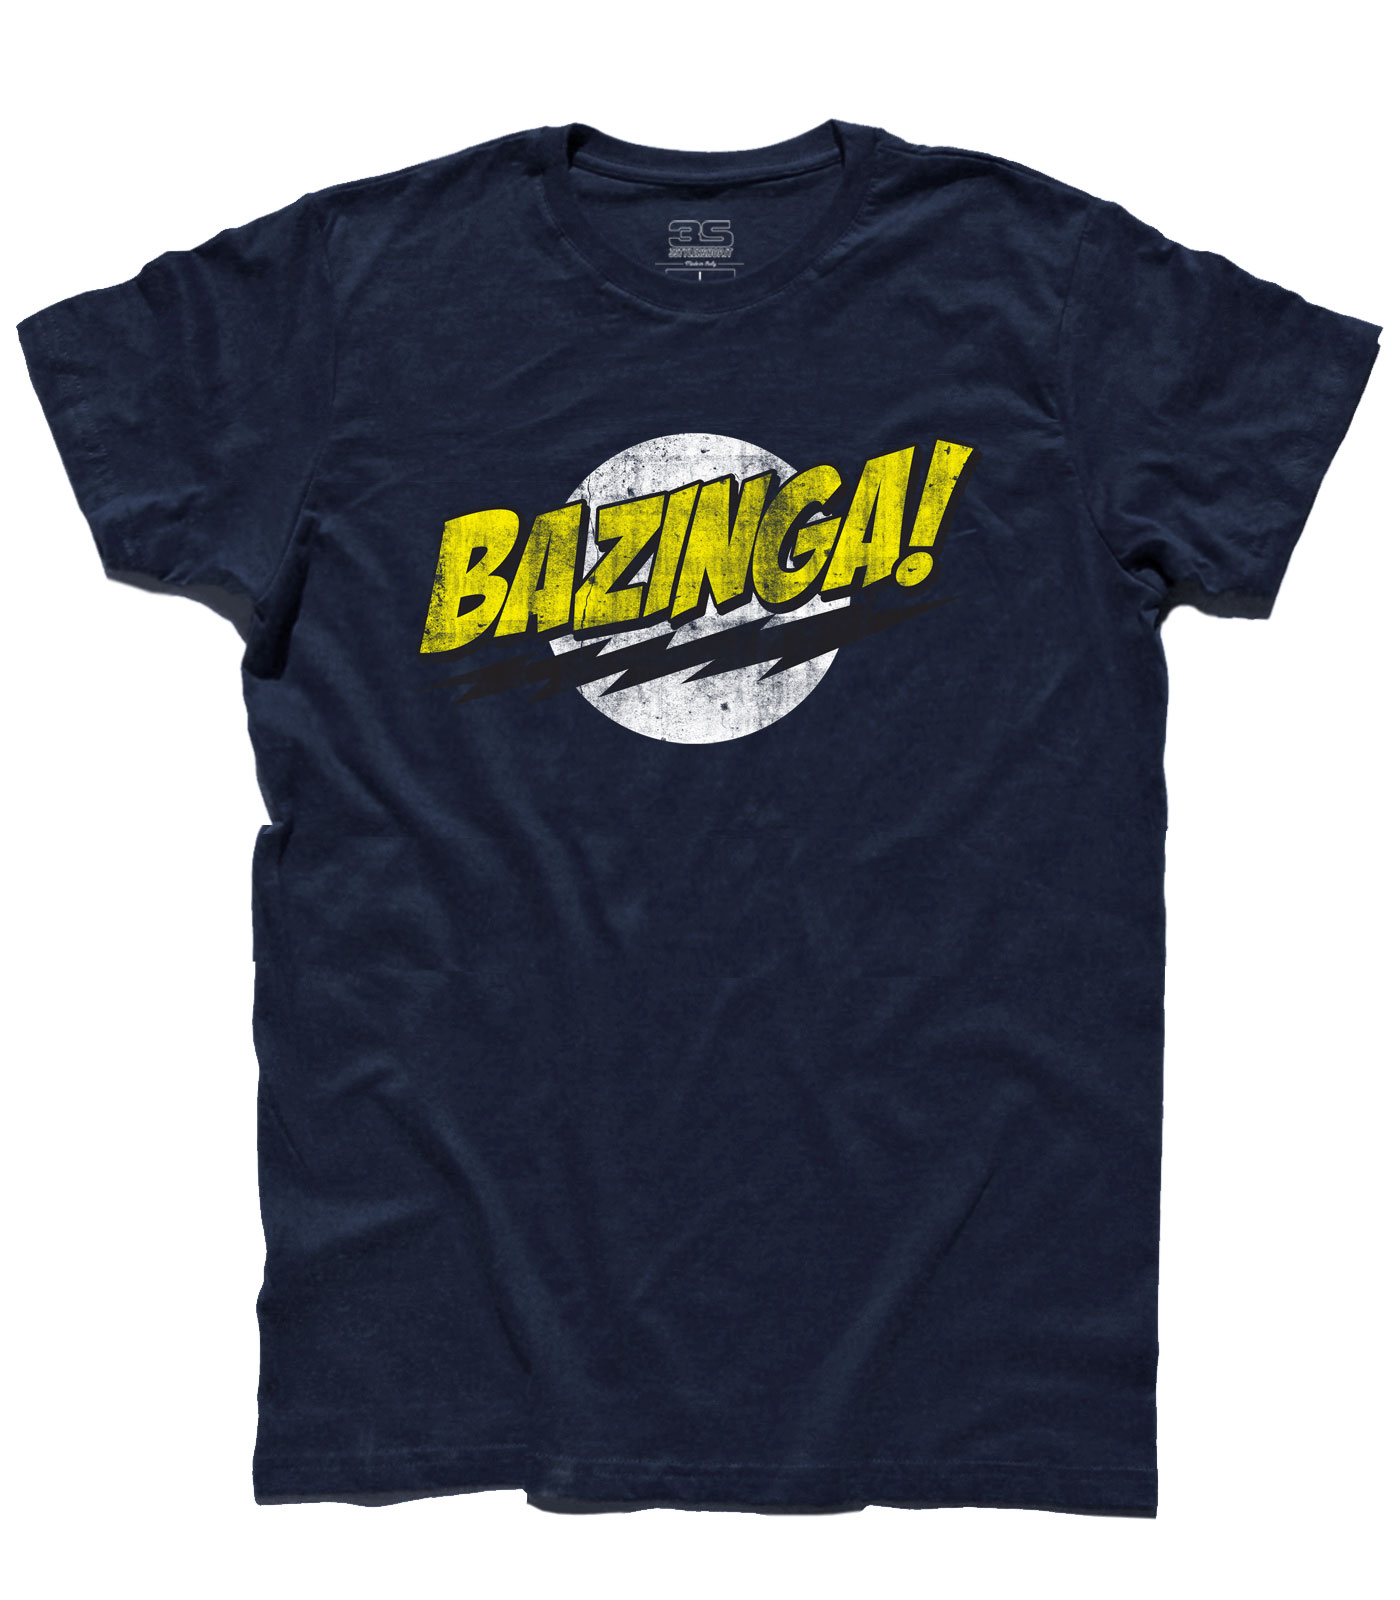 Bazinga t-shirt uomo - Inspired by The Big Bang Theory - 3Stylershop